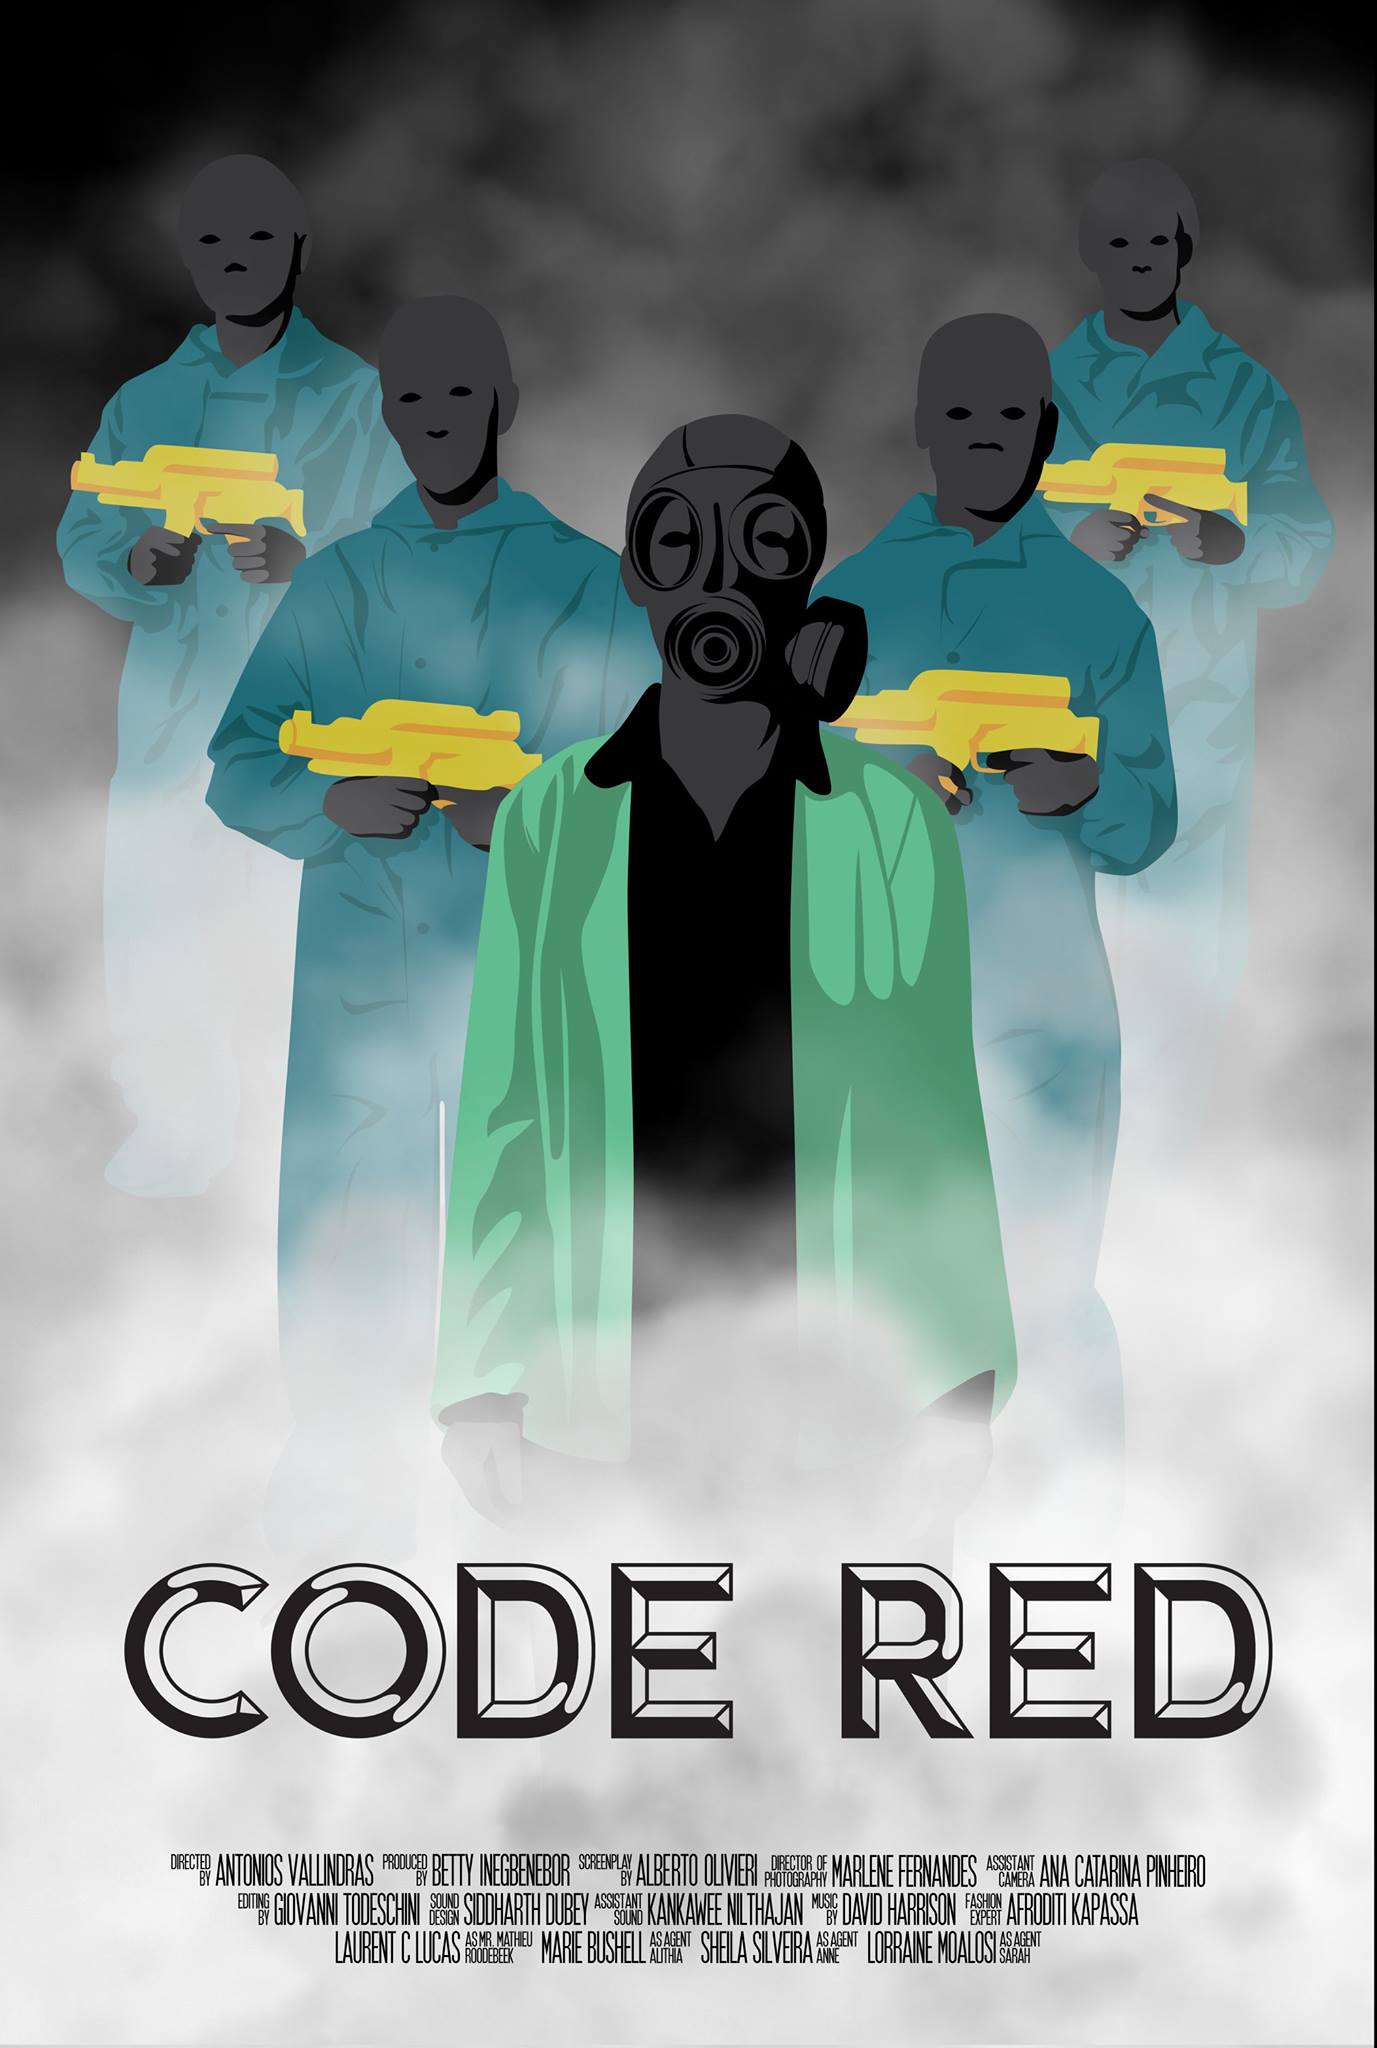 Code Red by Antonios Vallindras